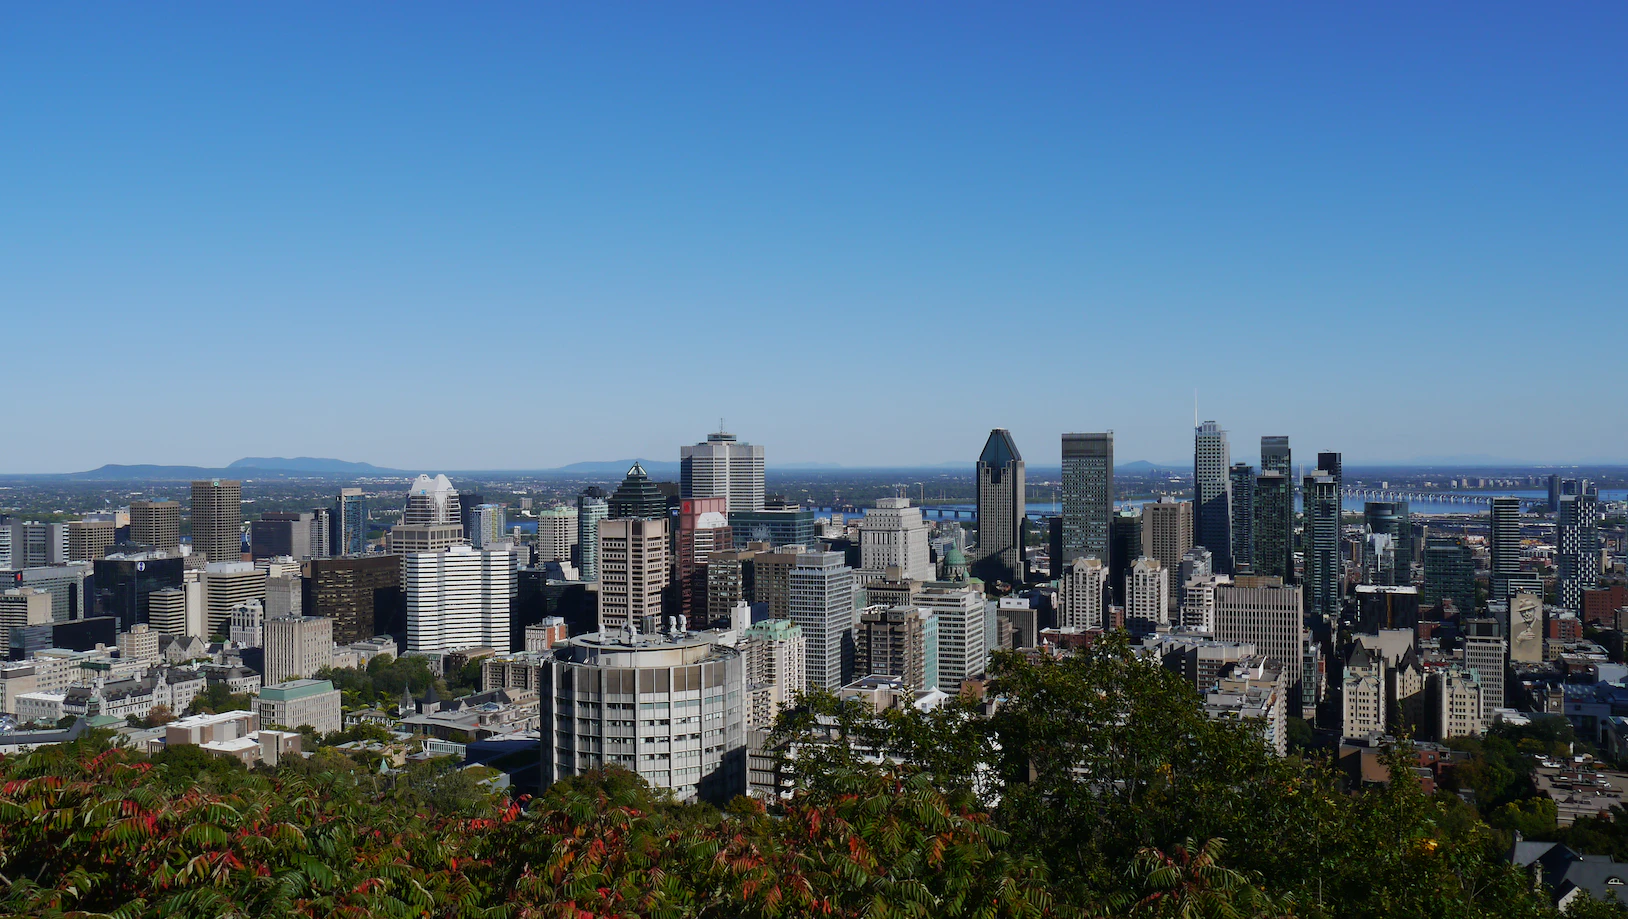 Mount Royal, Montreal, QC, Canada